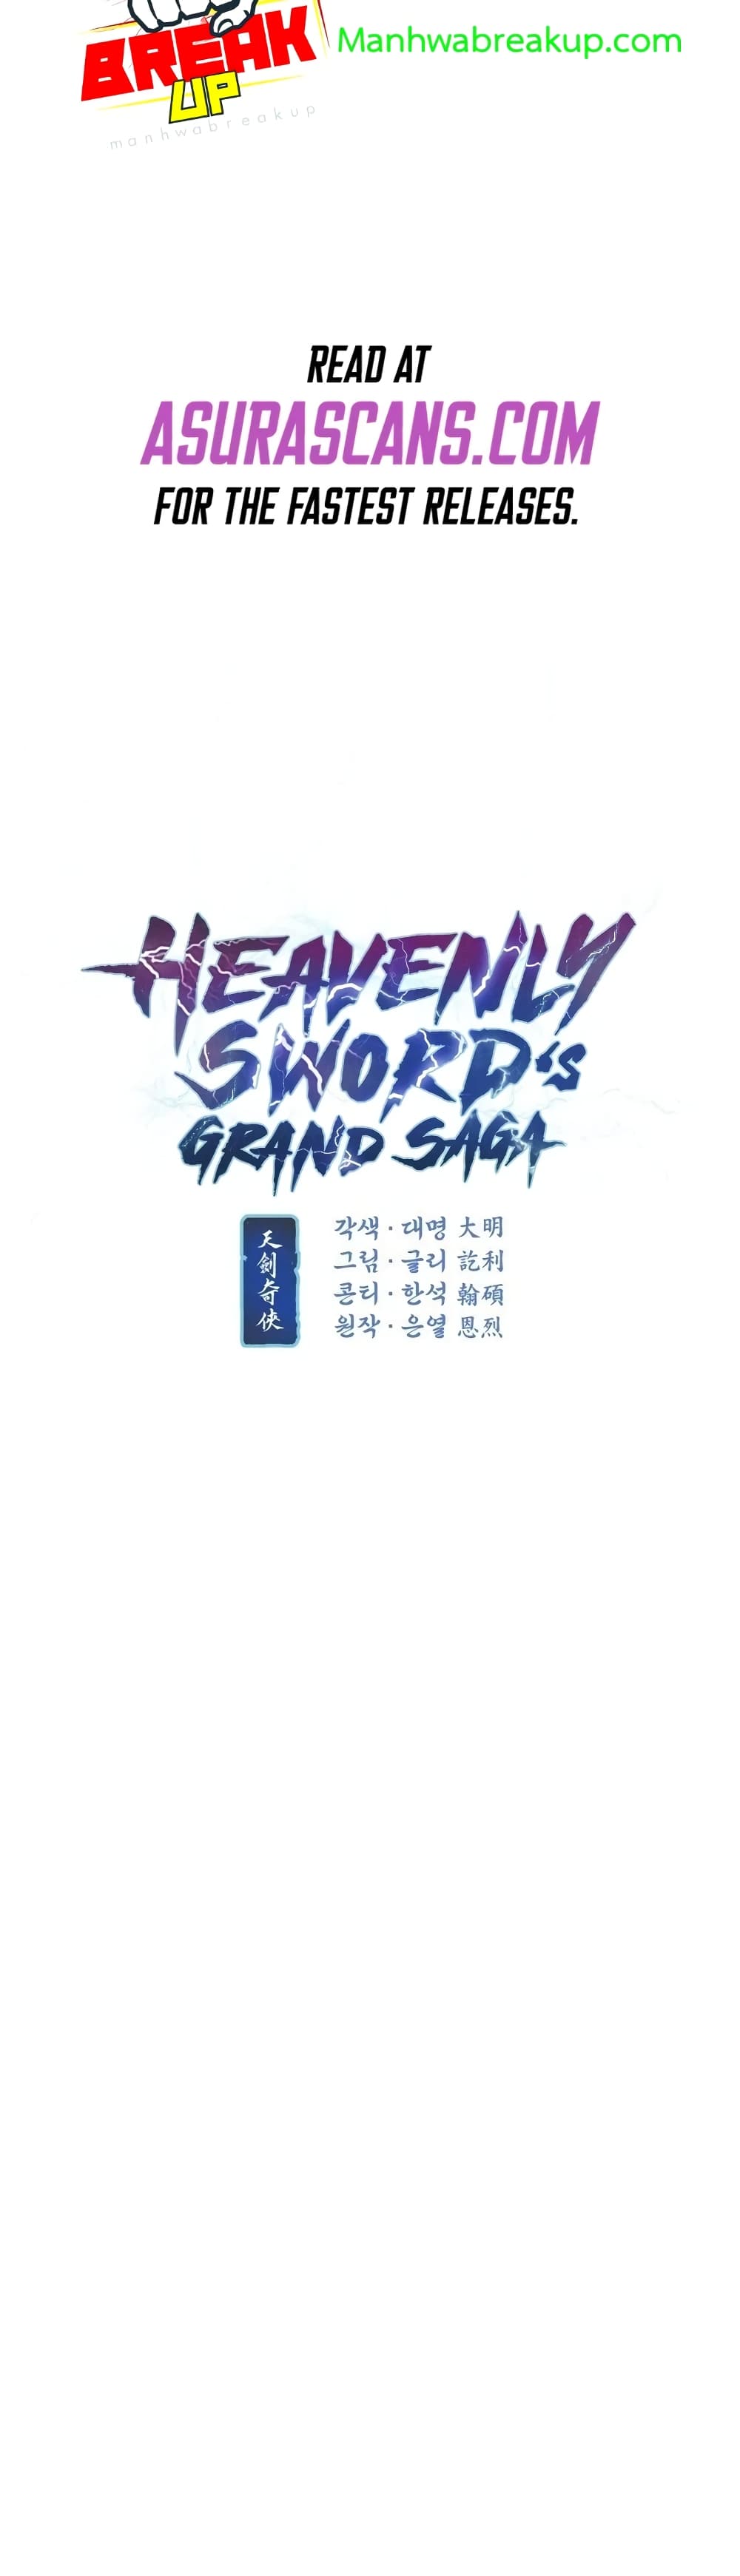 Heavenly Sword’s Grand Saga 11-11